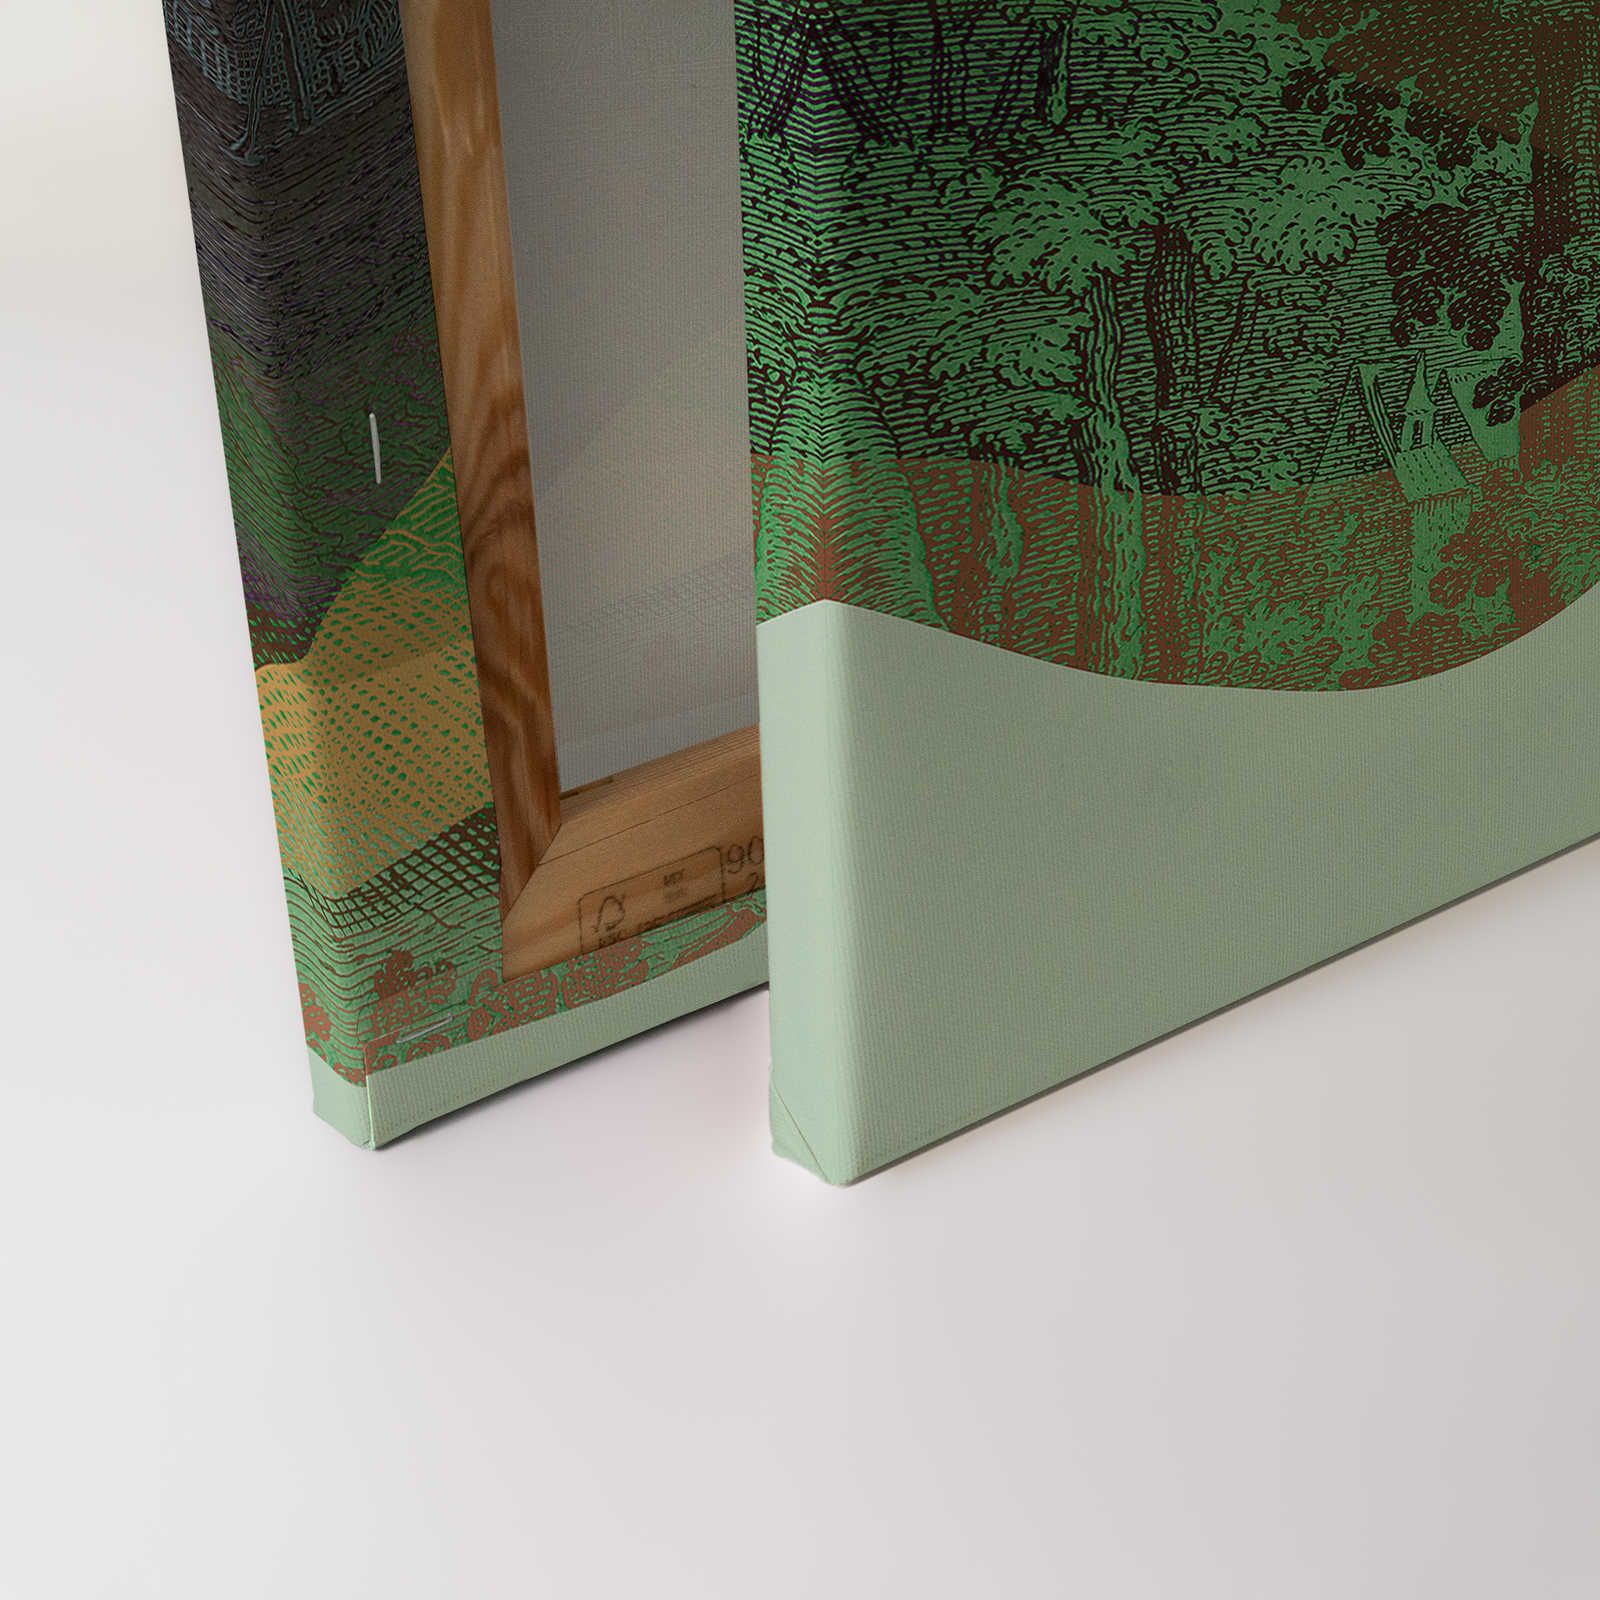             Magic Mountain 3 - Canvas painting green mountains modern design - 0,90 m x 0,60 m
        